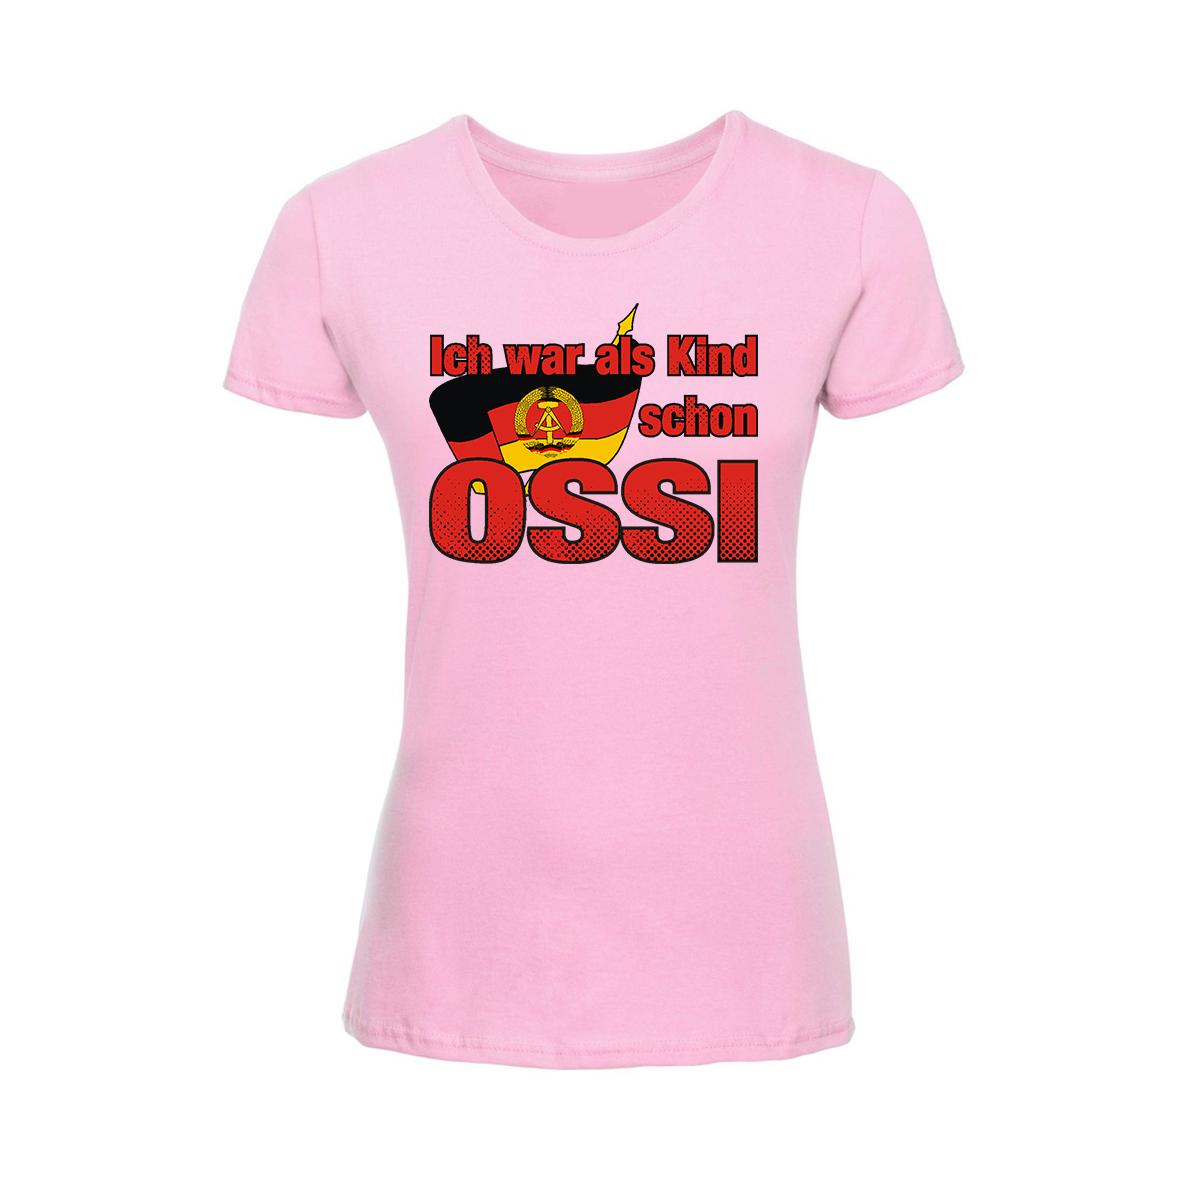 Ich war als Kind schon Ossi - Frauen Shirt - rosa